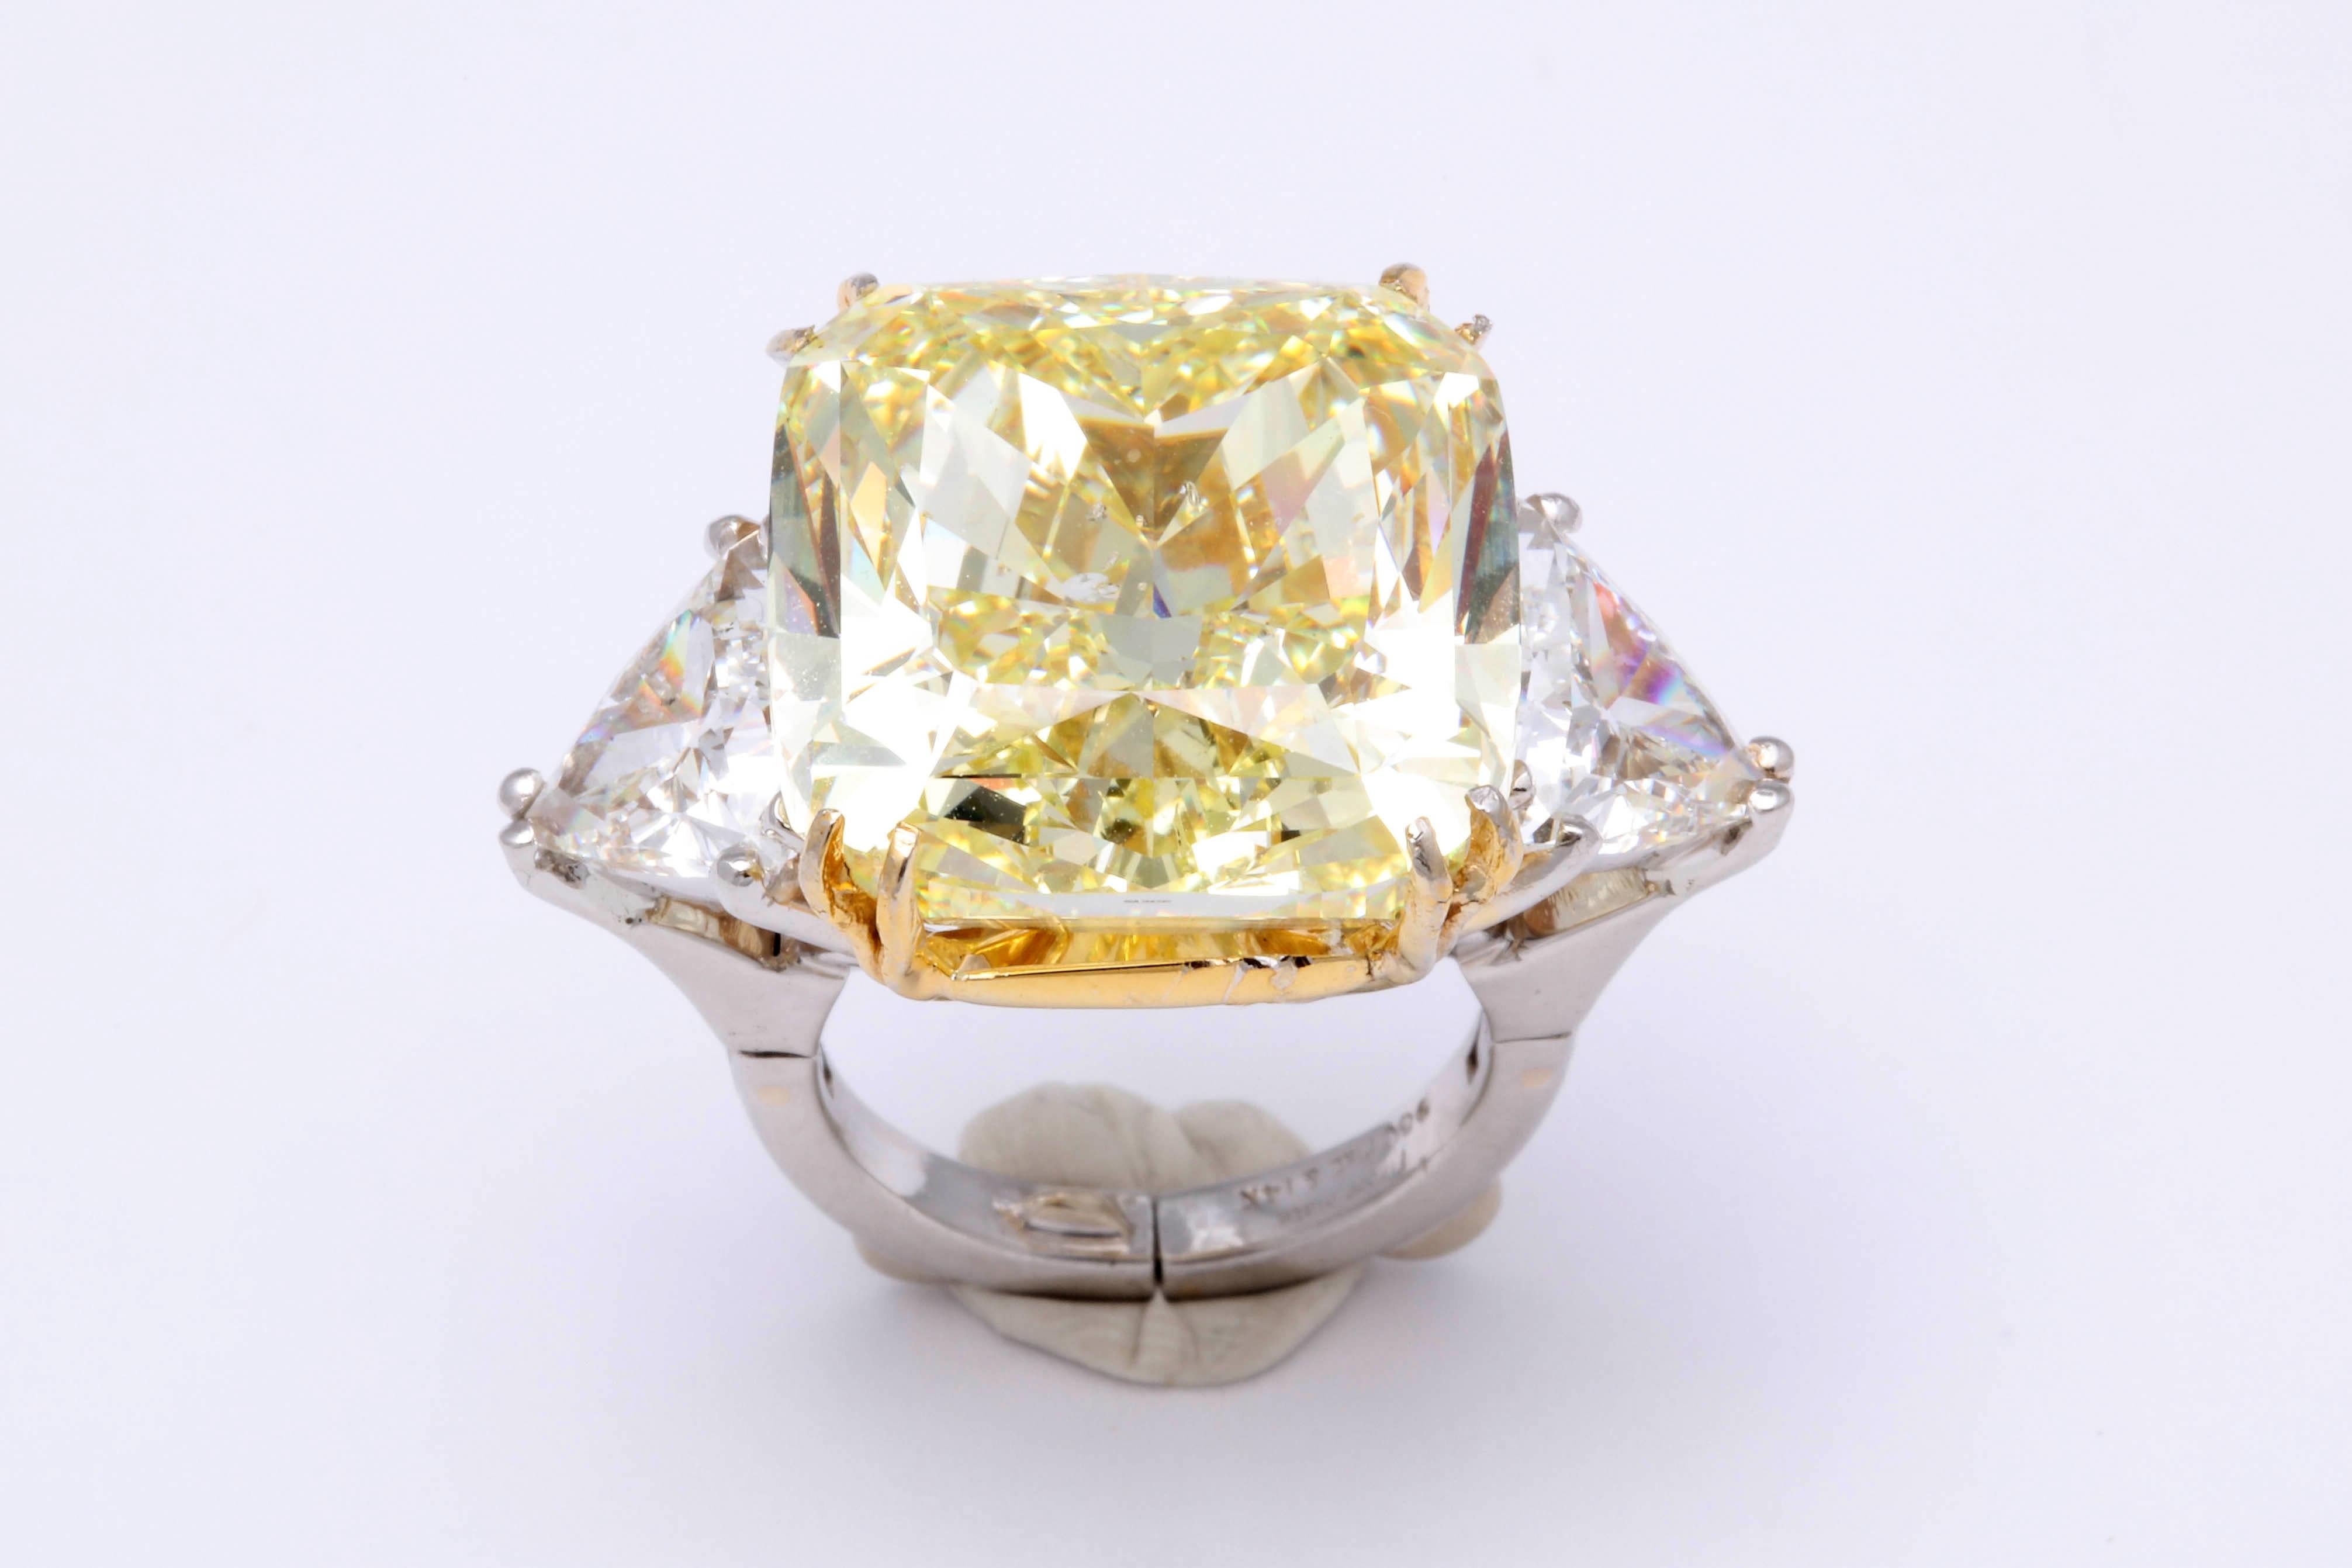 Exquisite Fancy Light Yellow Diamond Ring 4.40 Ct Sieraden Ringen Bruiloft & Verloving Verlovingsringen 5.03 Ct TW Cushion Shape GIA Certified 2215461851 Elegant Dainty Jewelry Gift For Women 